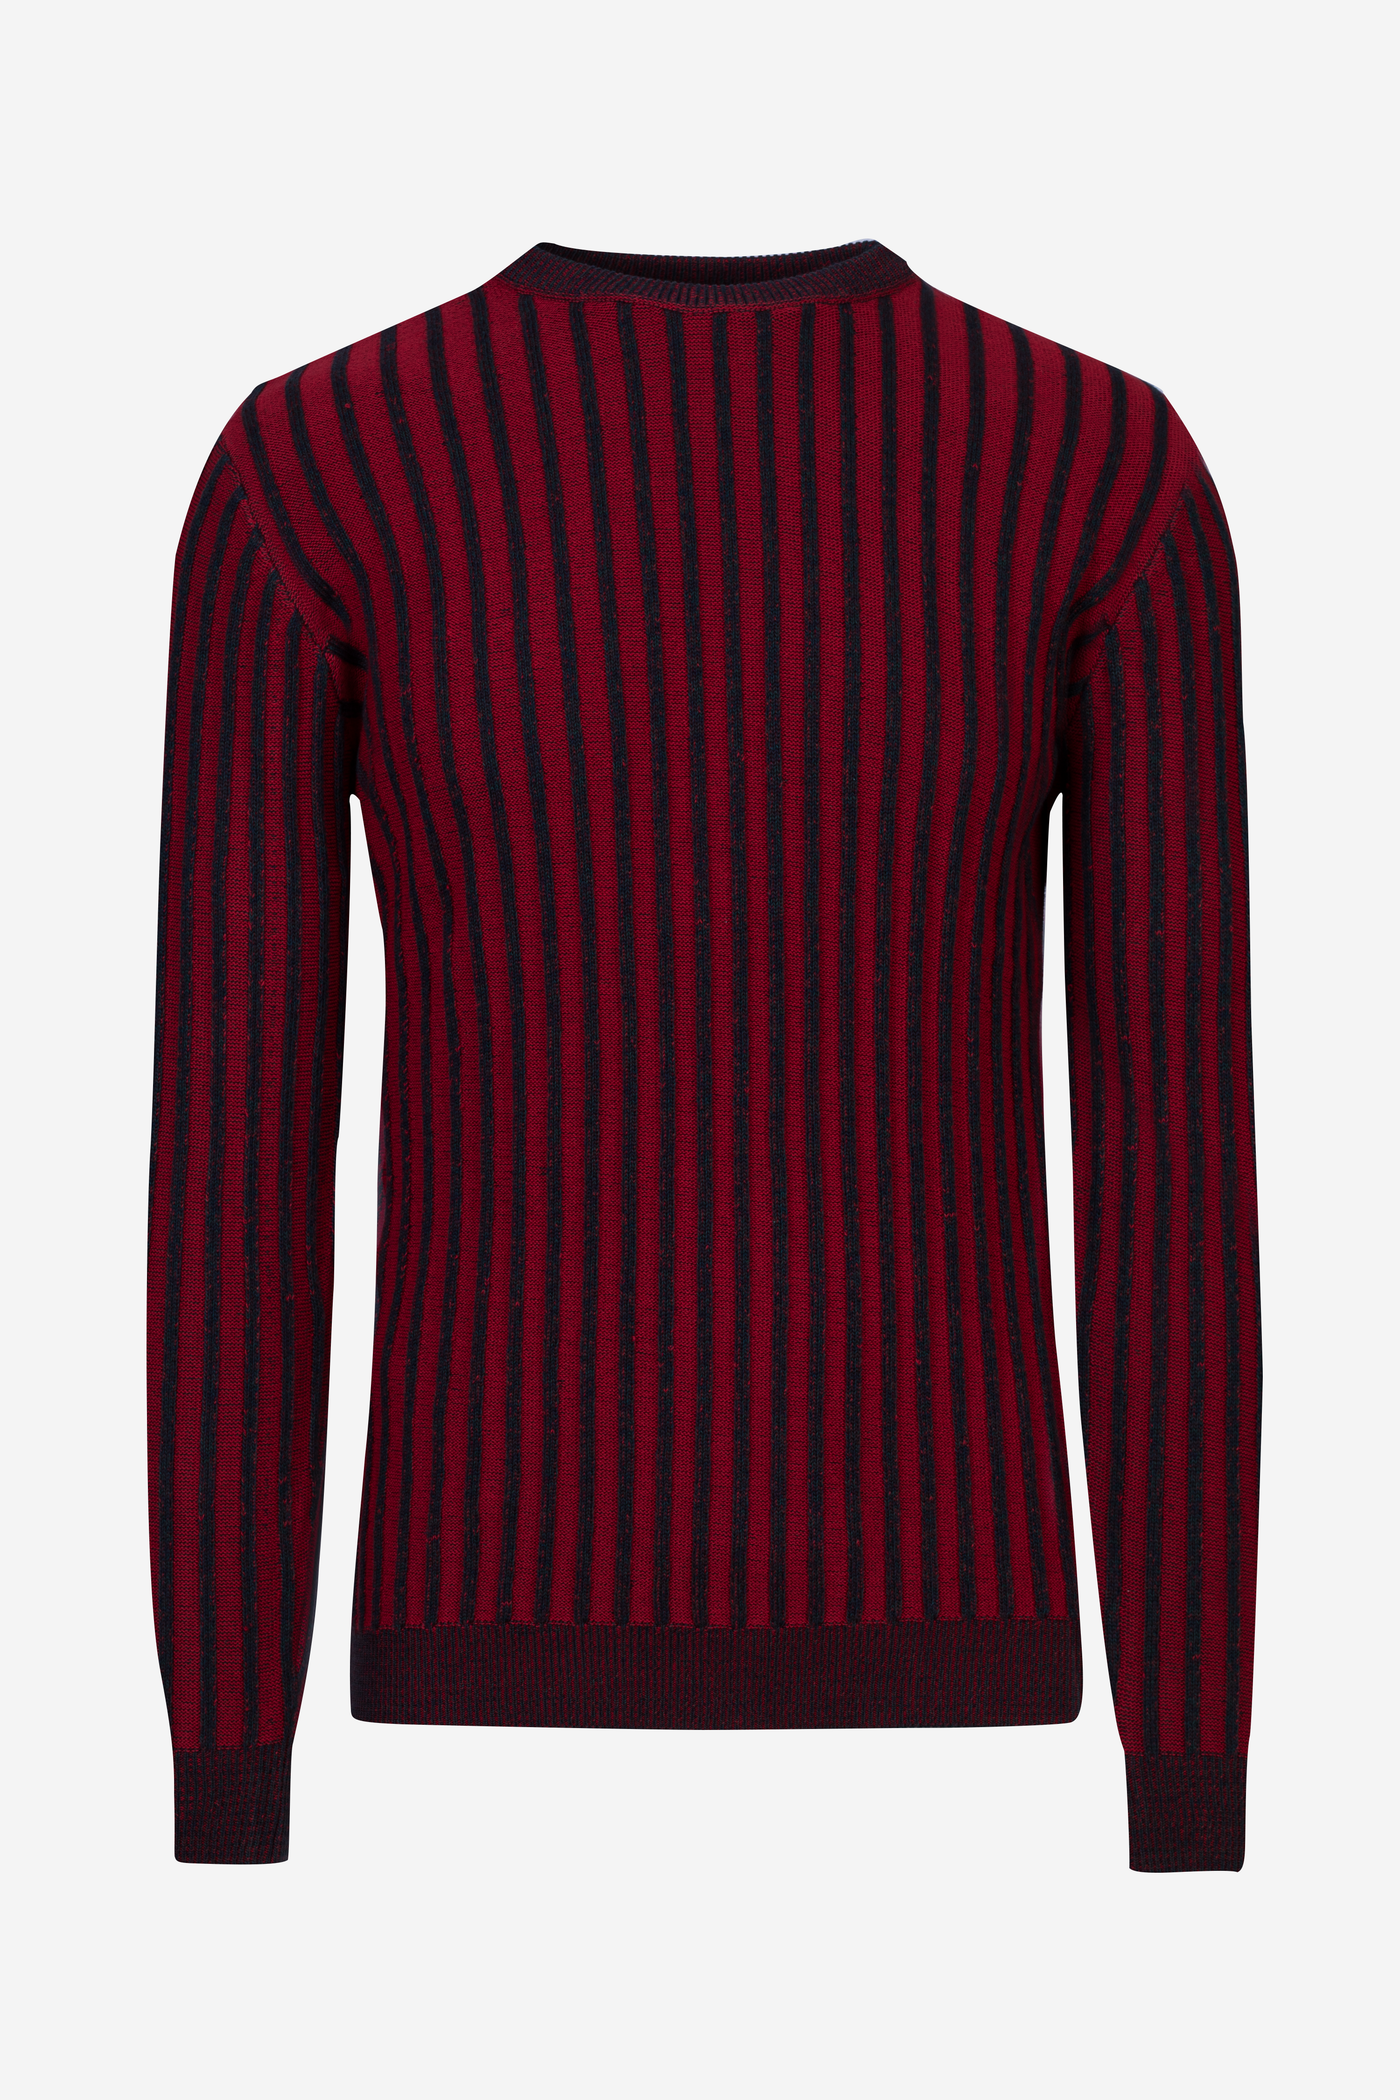 Vivid Red Stripe Pullover